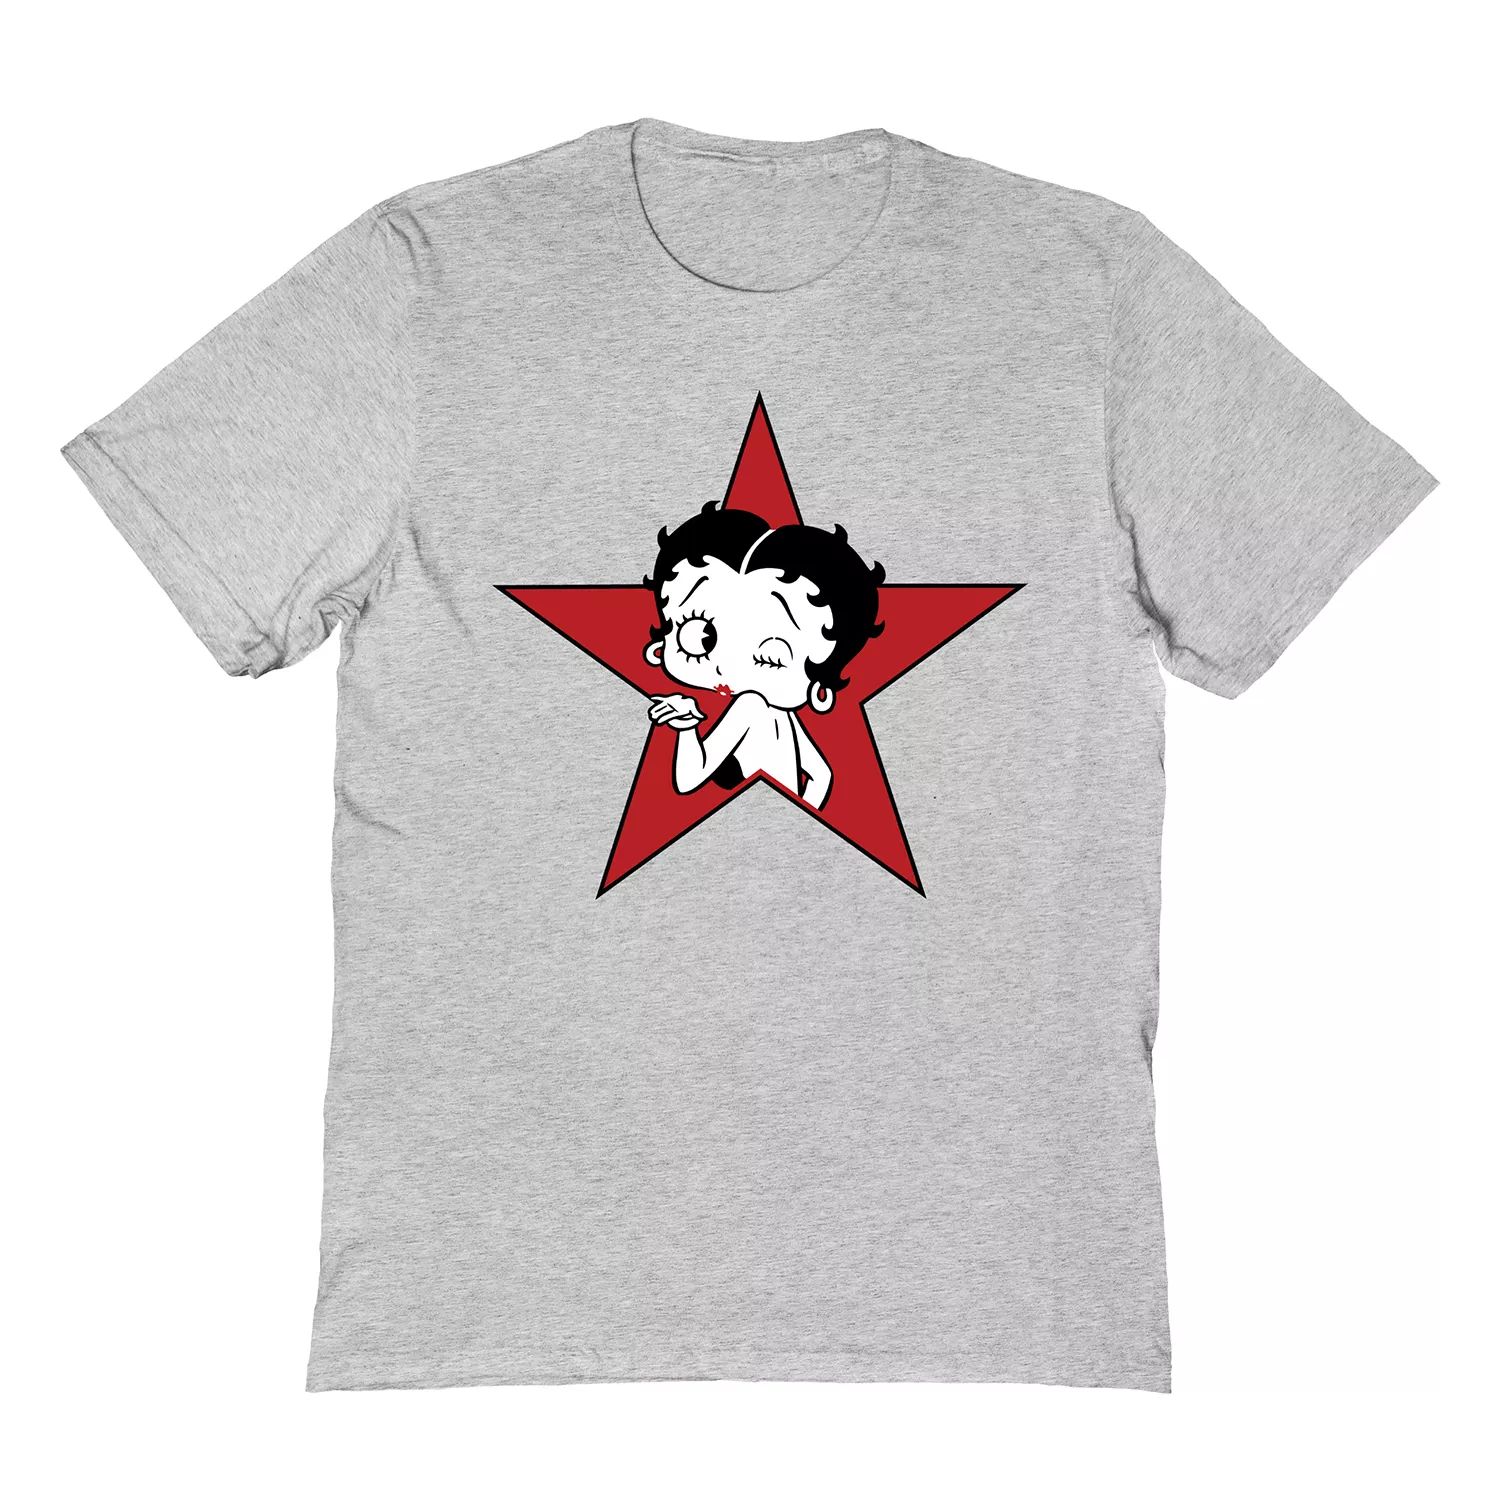 Мужская футболка Betty Boop Licensed Character